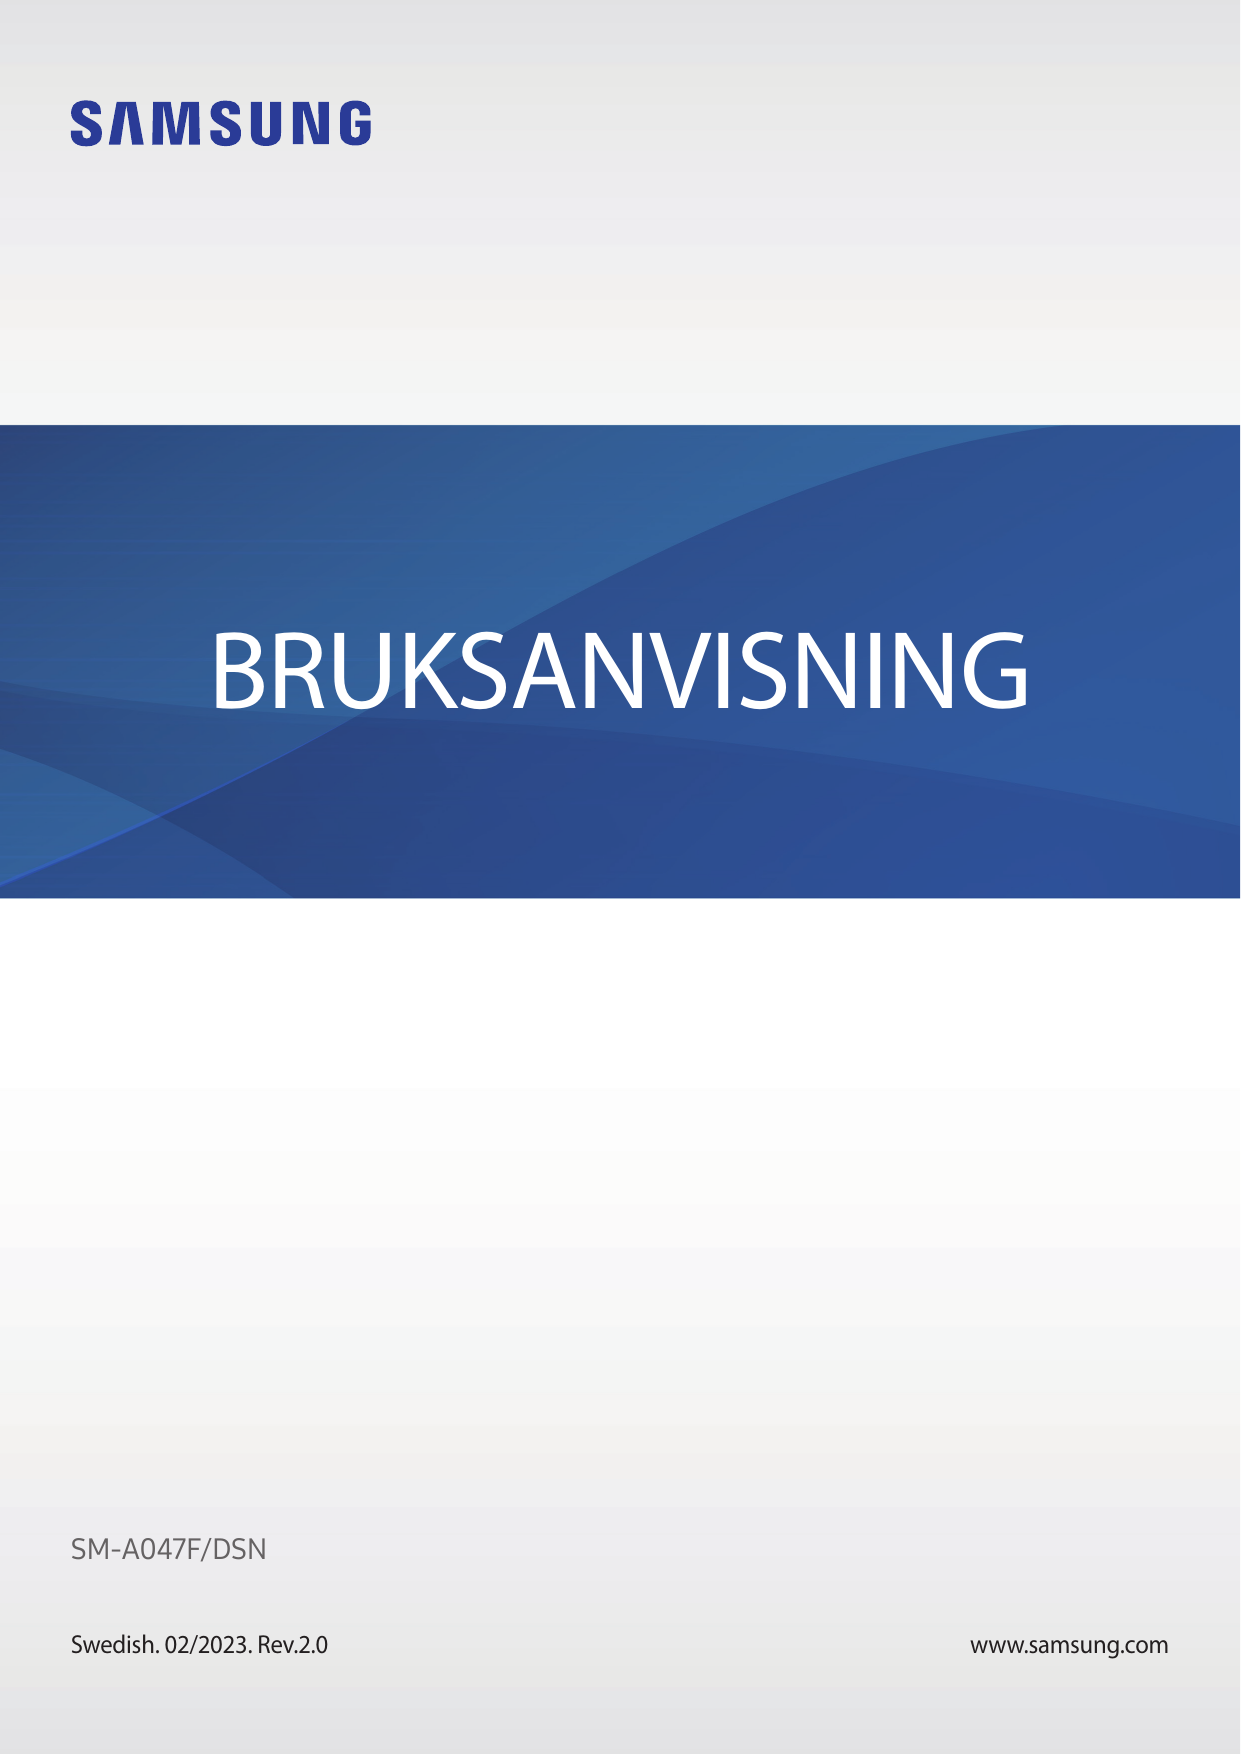 BRUKSANVISNINGSM-A047F/DSNSwedish. 02/2023. Rev.2.0www.samsung.com